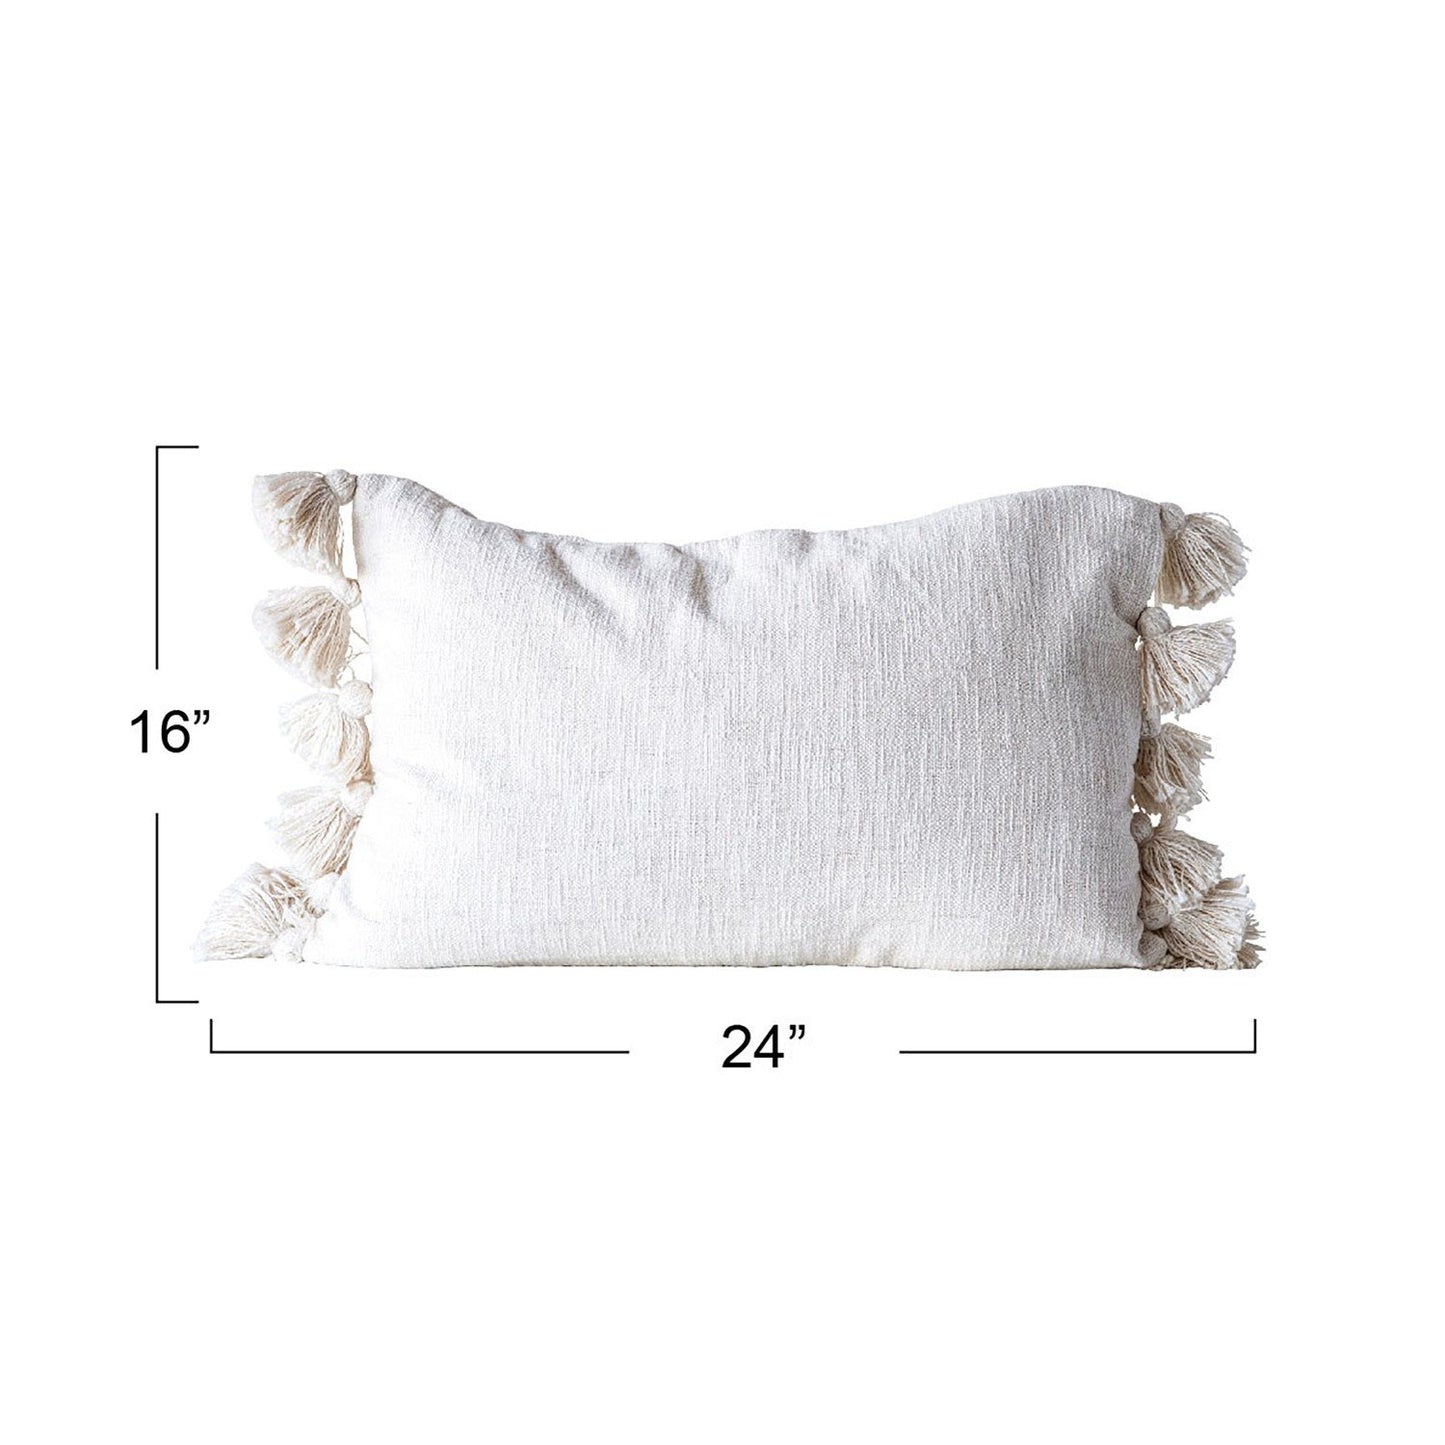 24" x 16" Woven Cotton Slub Lumbar Pillow with Tassels